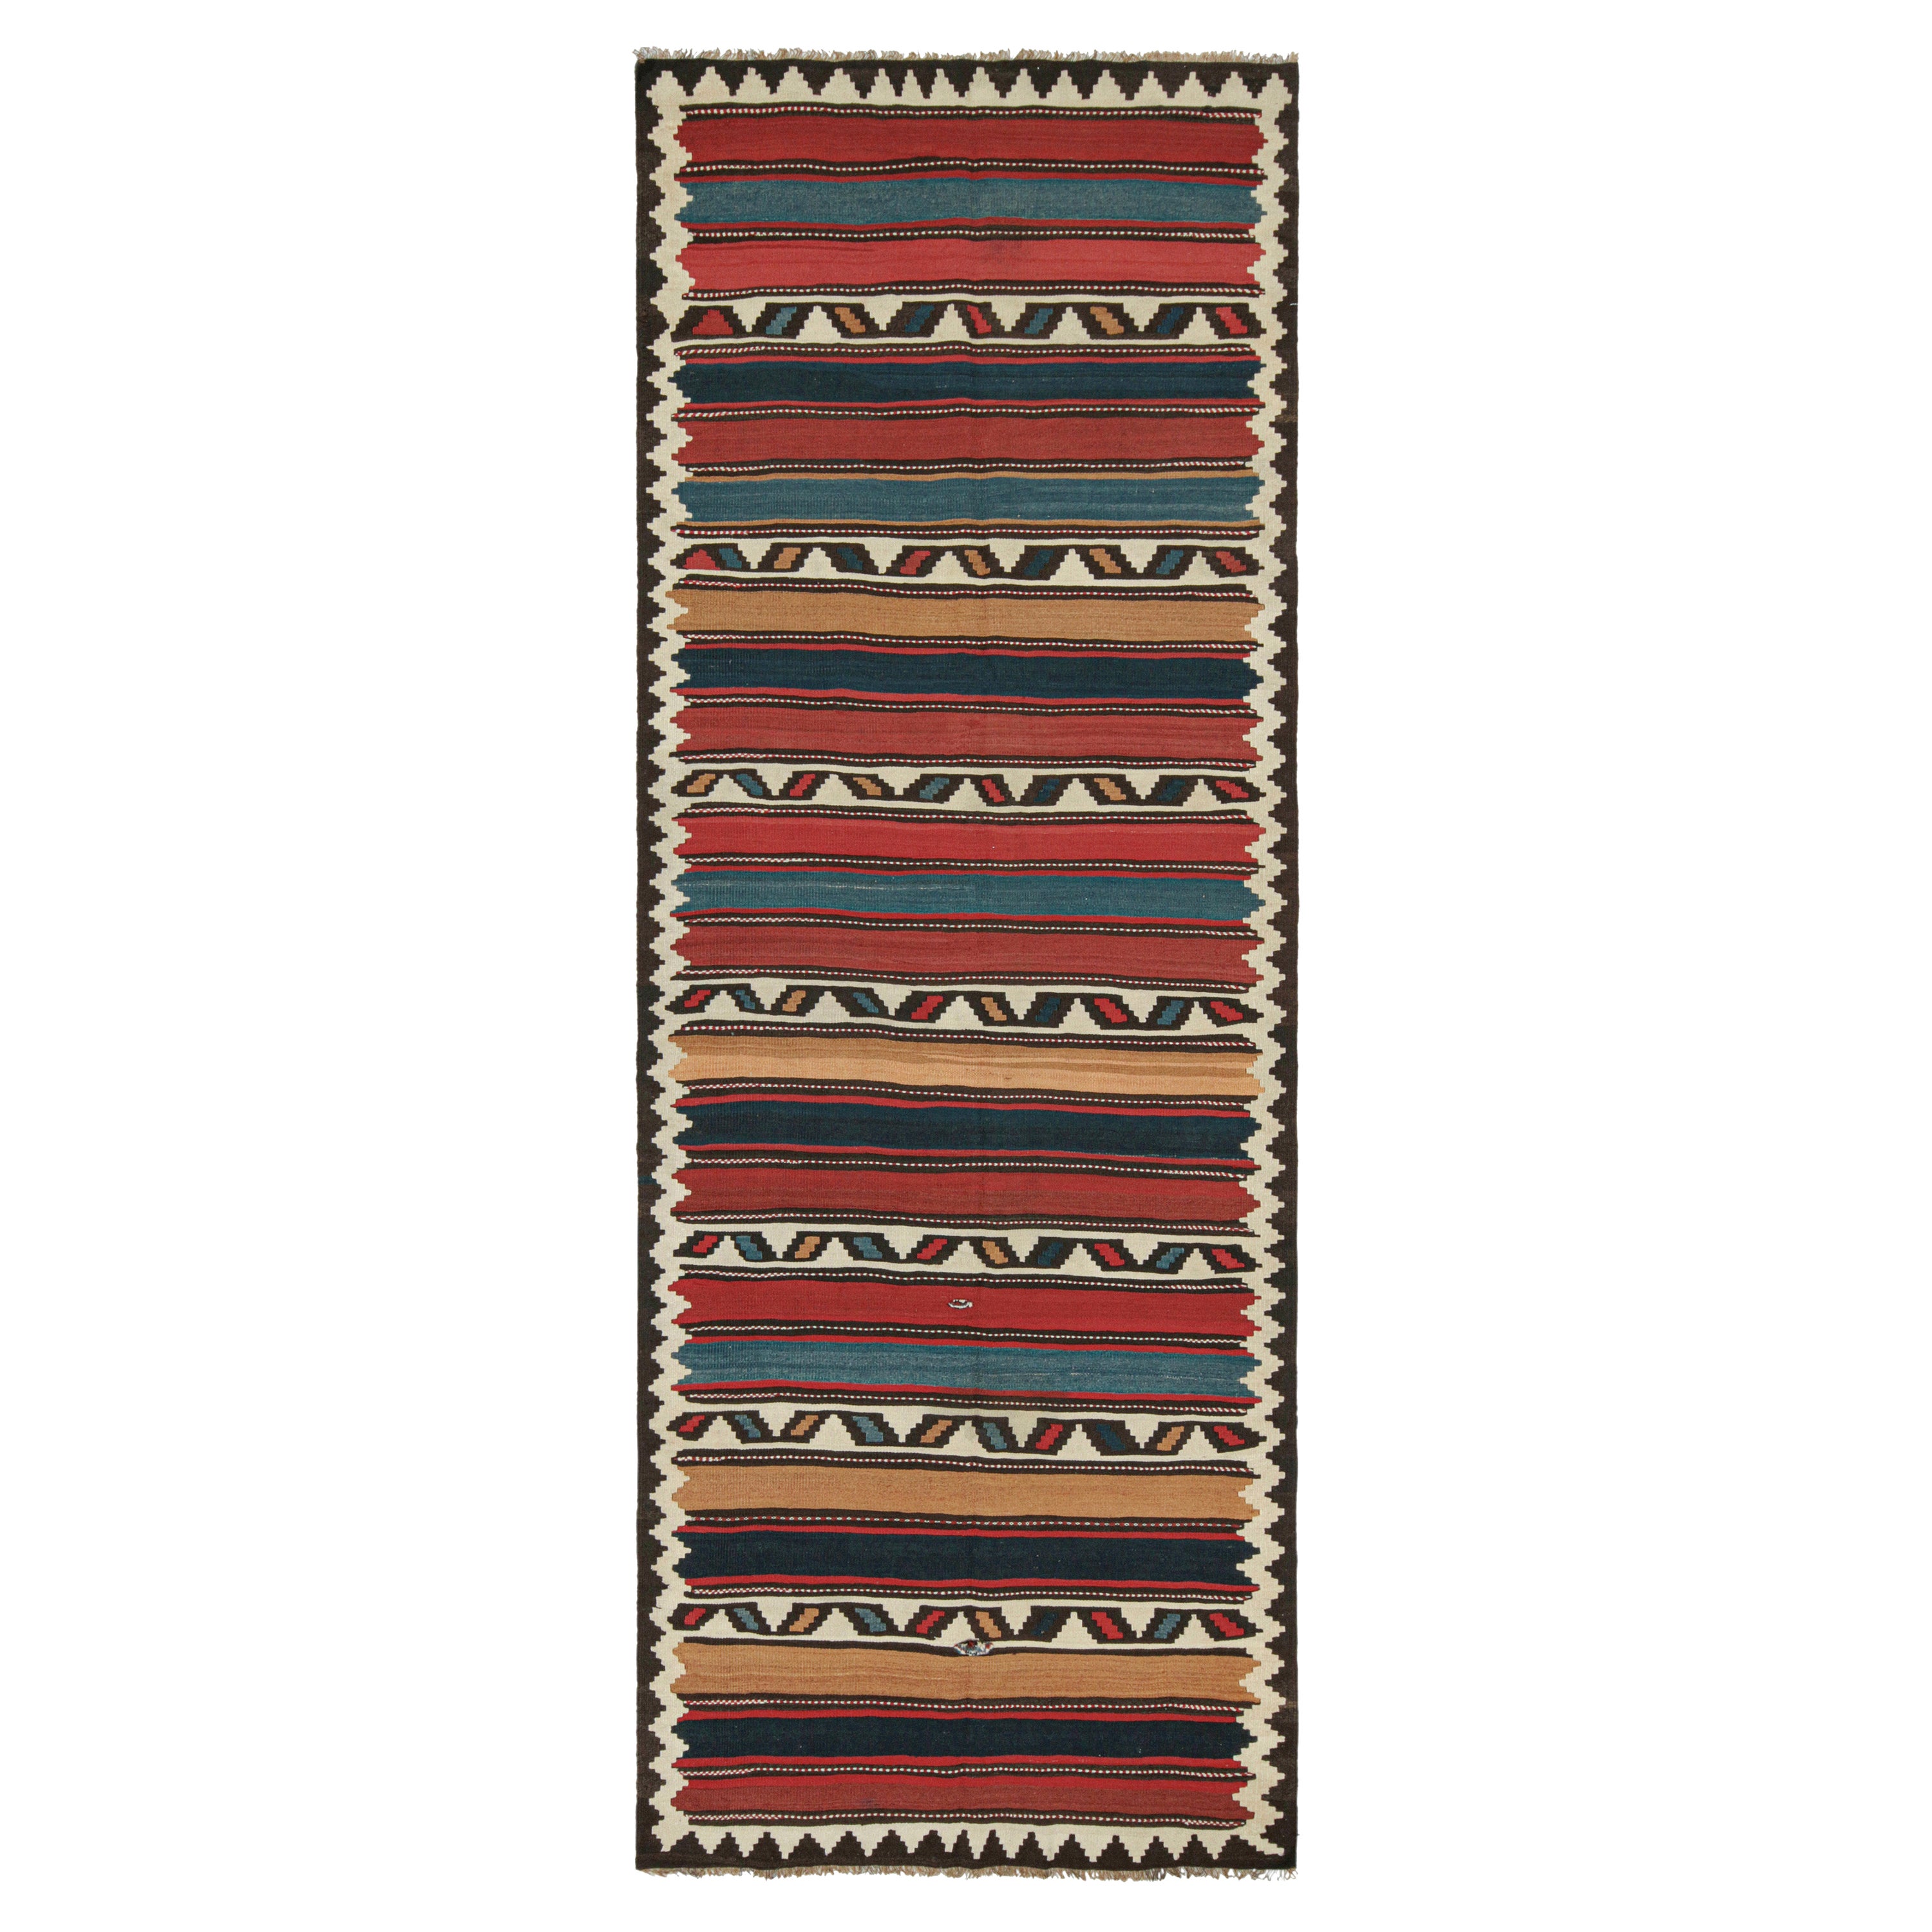 Vintage Shahsavan Persian Kilim with Stripes & Geometric Patterns